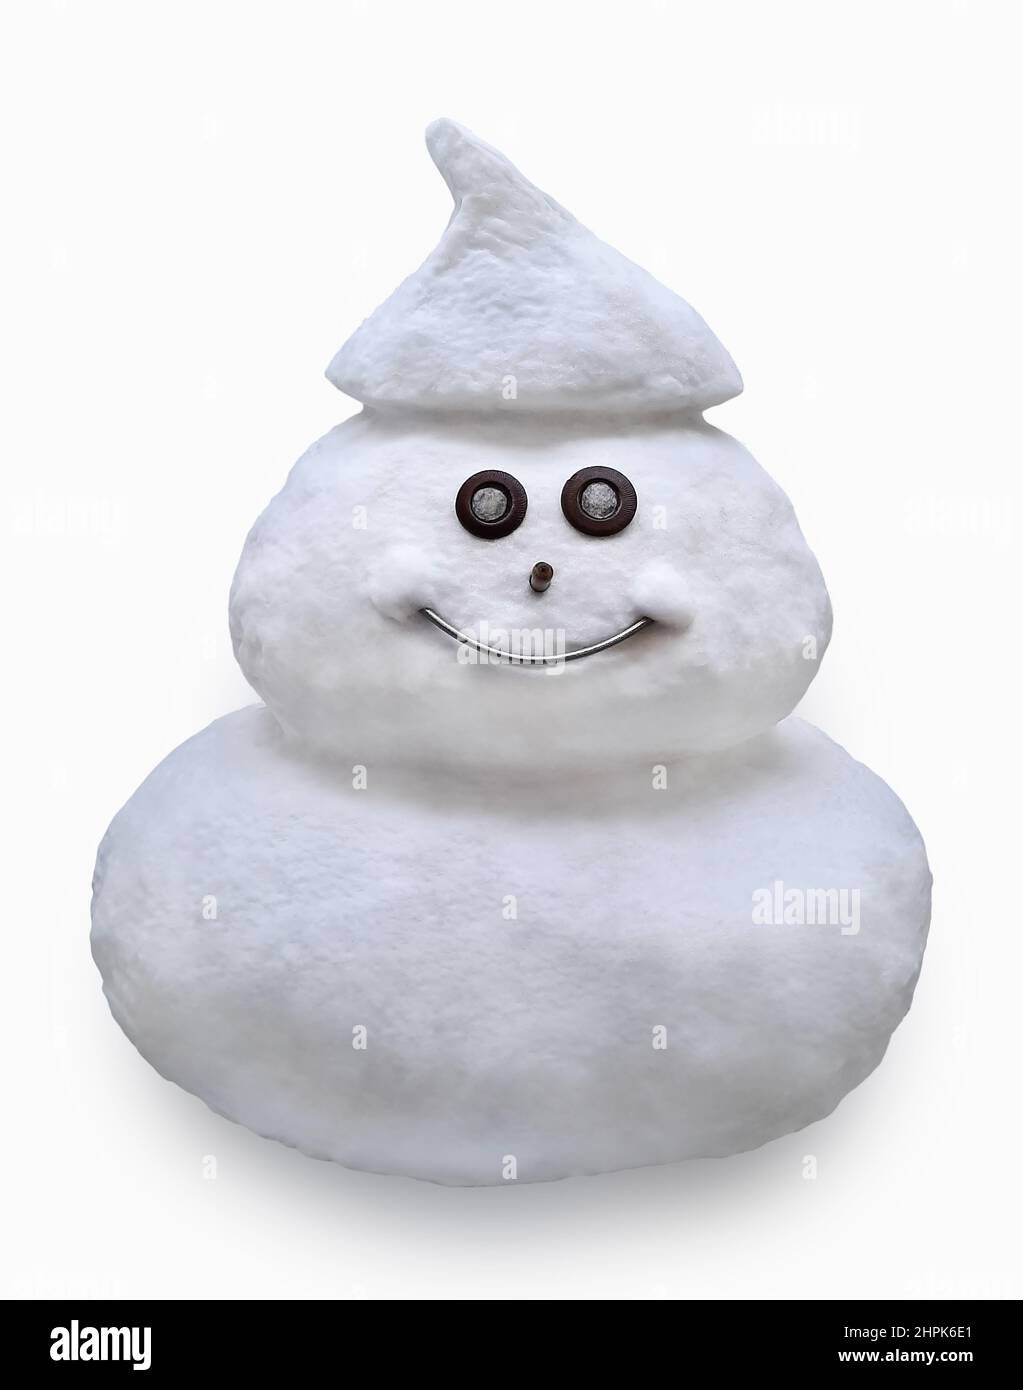 Funny snowman. On white background Stock Photo